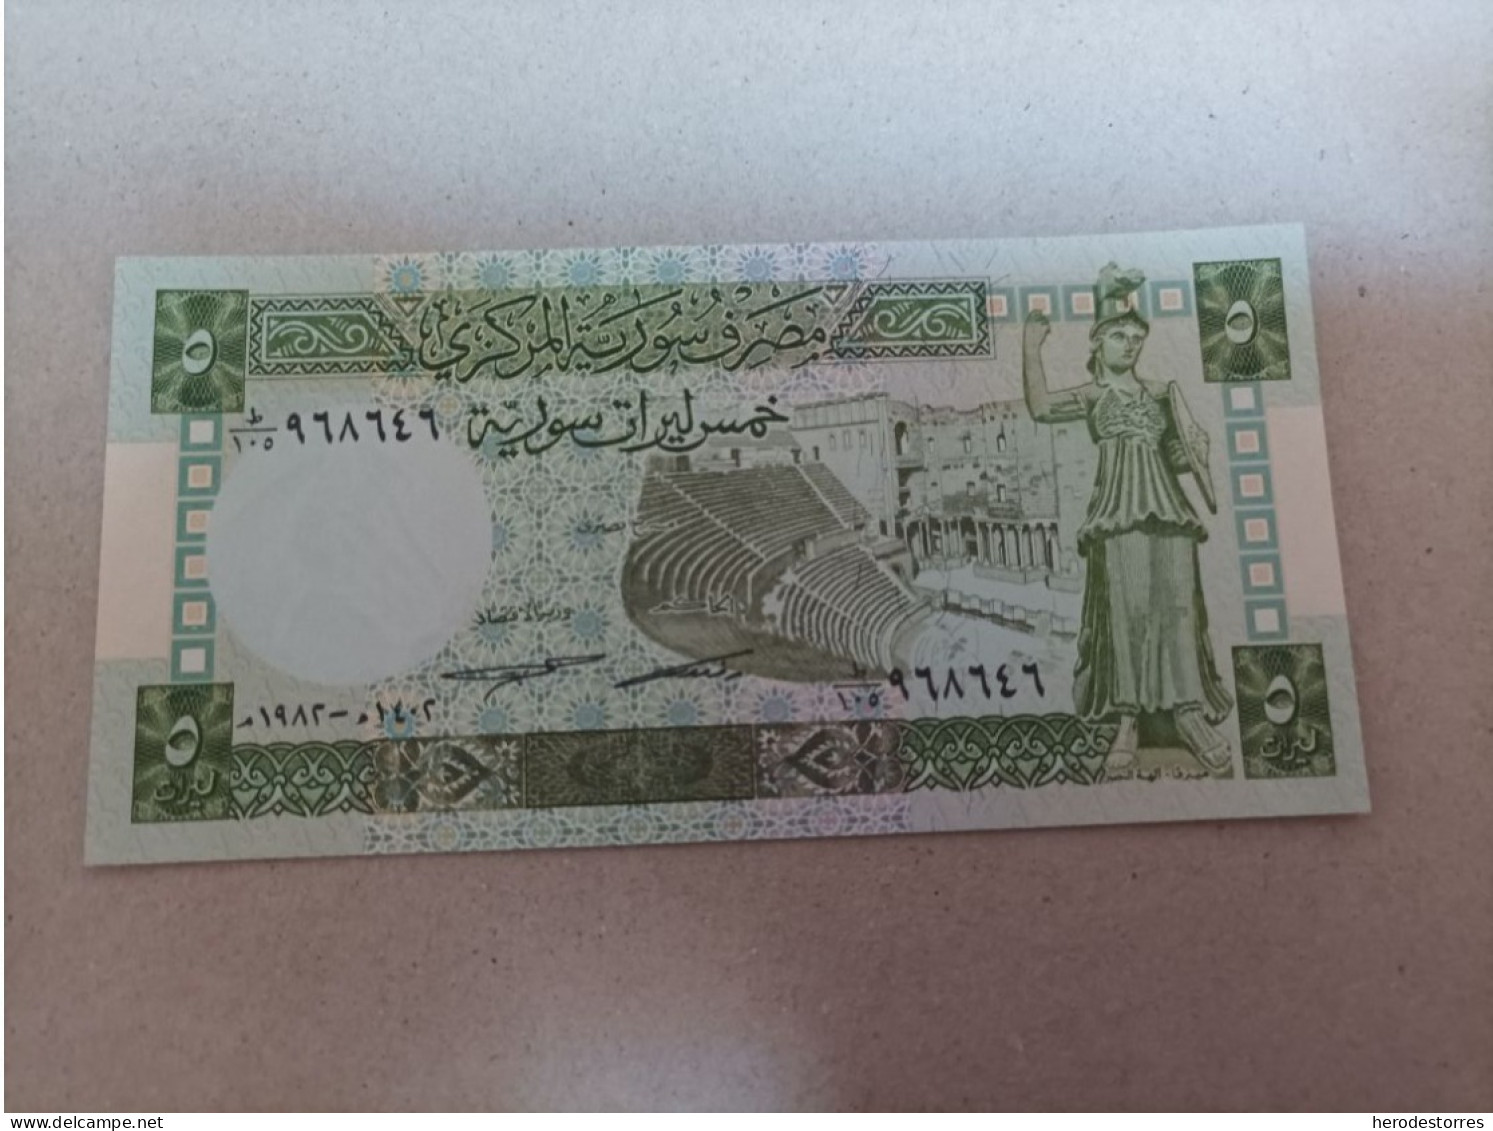 Billete Siria De 5 Syrian Pounds, Año 1982, UNC - Syrie